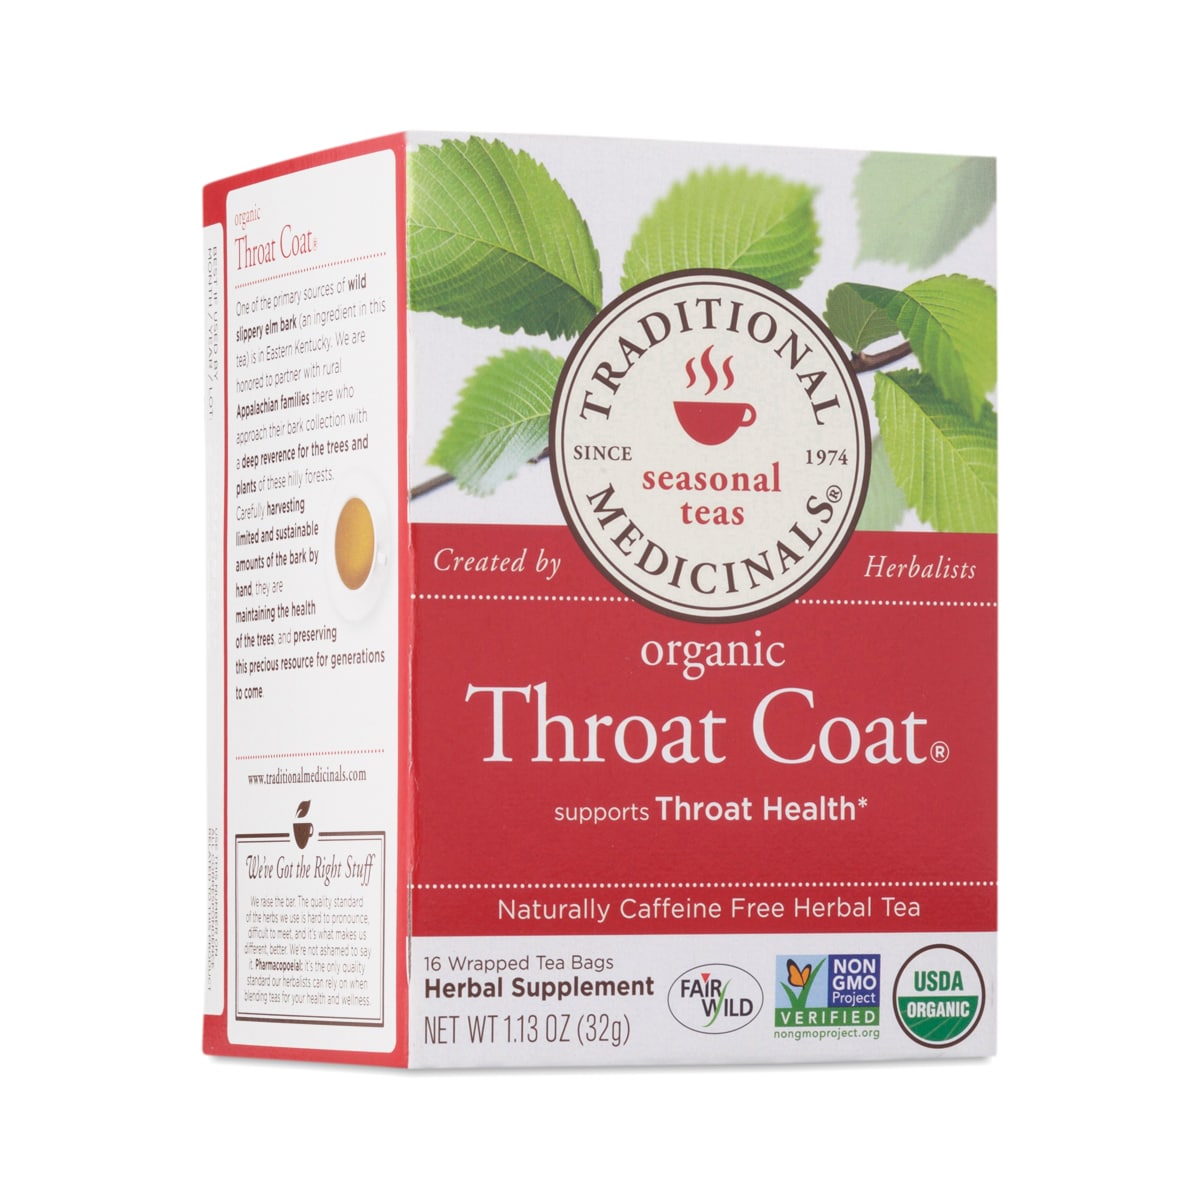 Throat Coat Herbal Tea by Traditional Medicinals